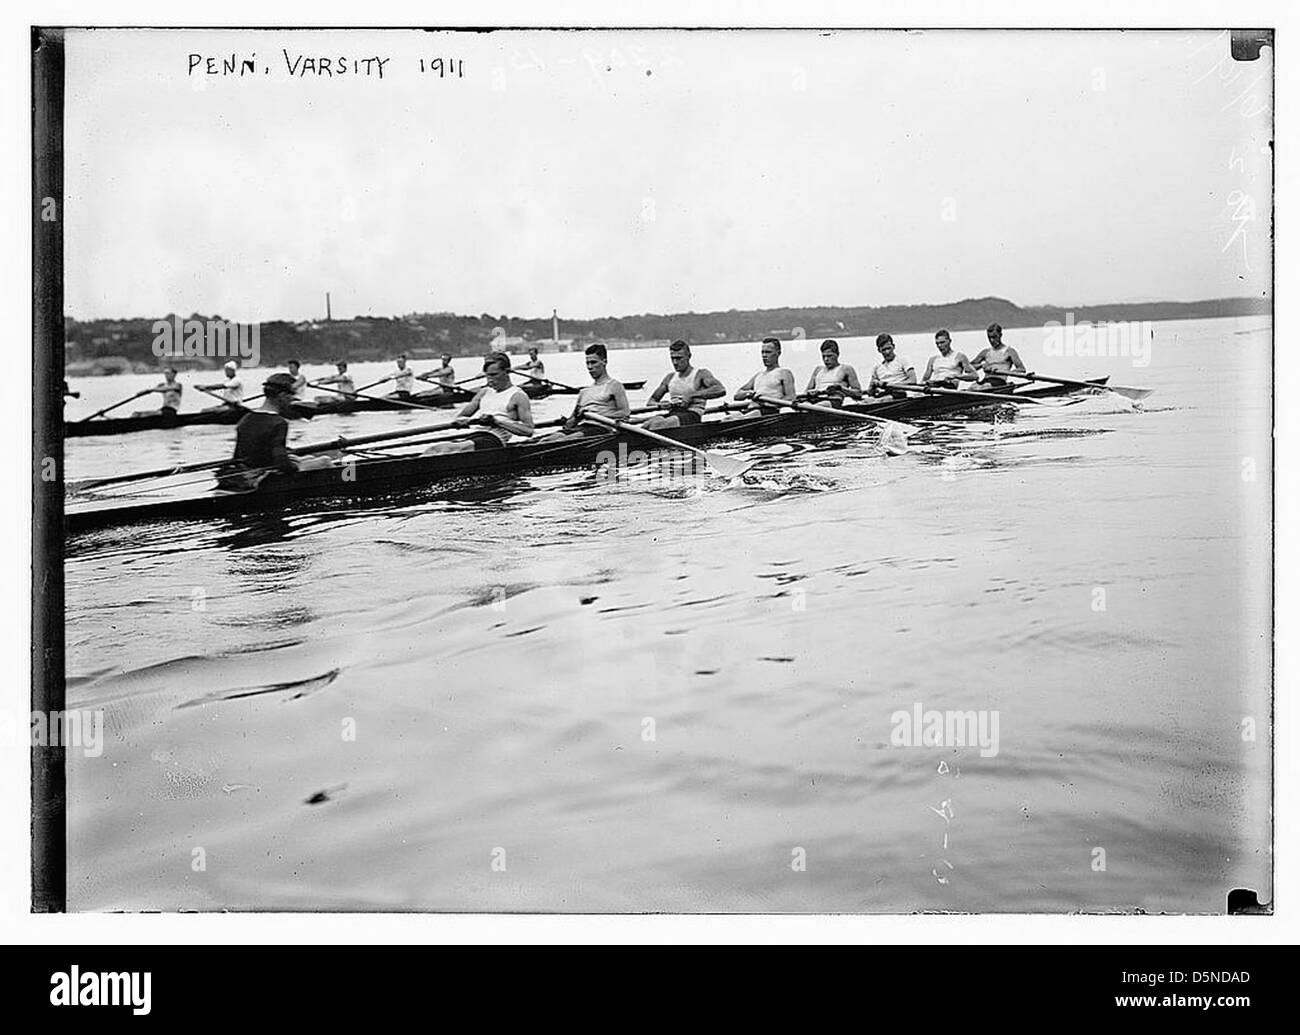 Penn. Varsity, 1911 (LOC) Stock Photo